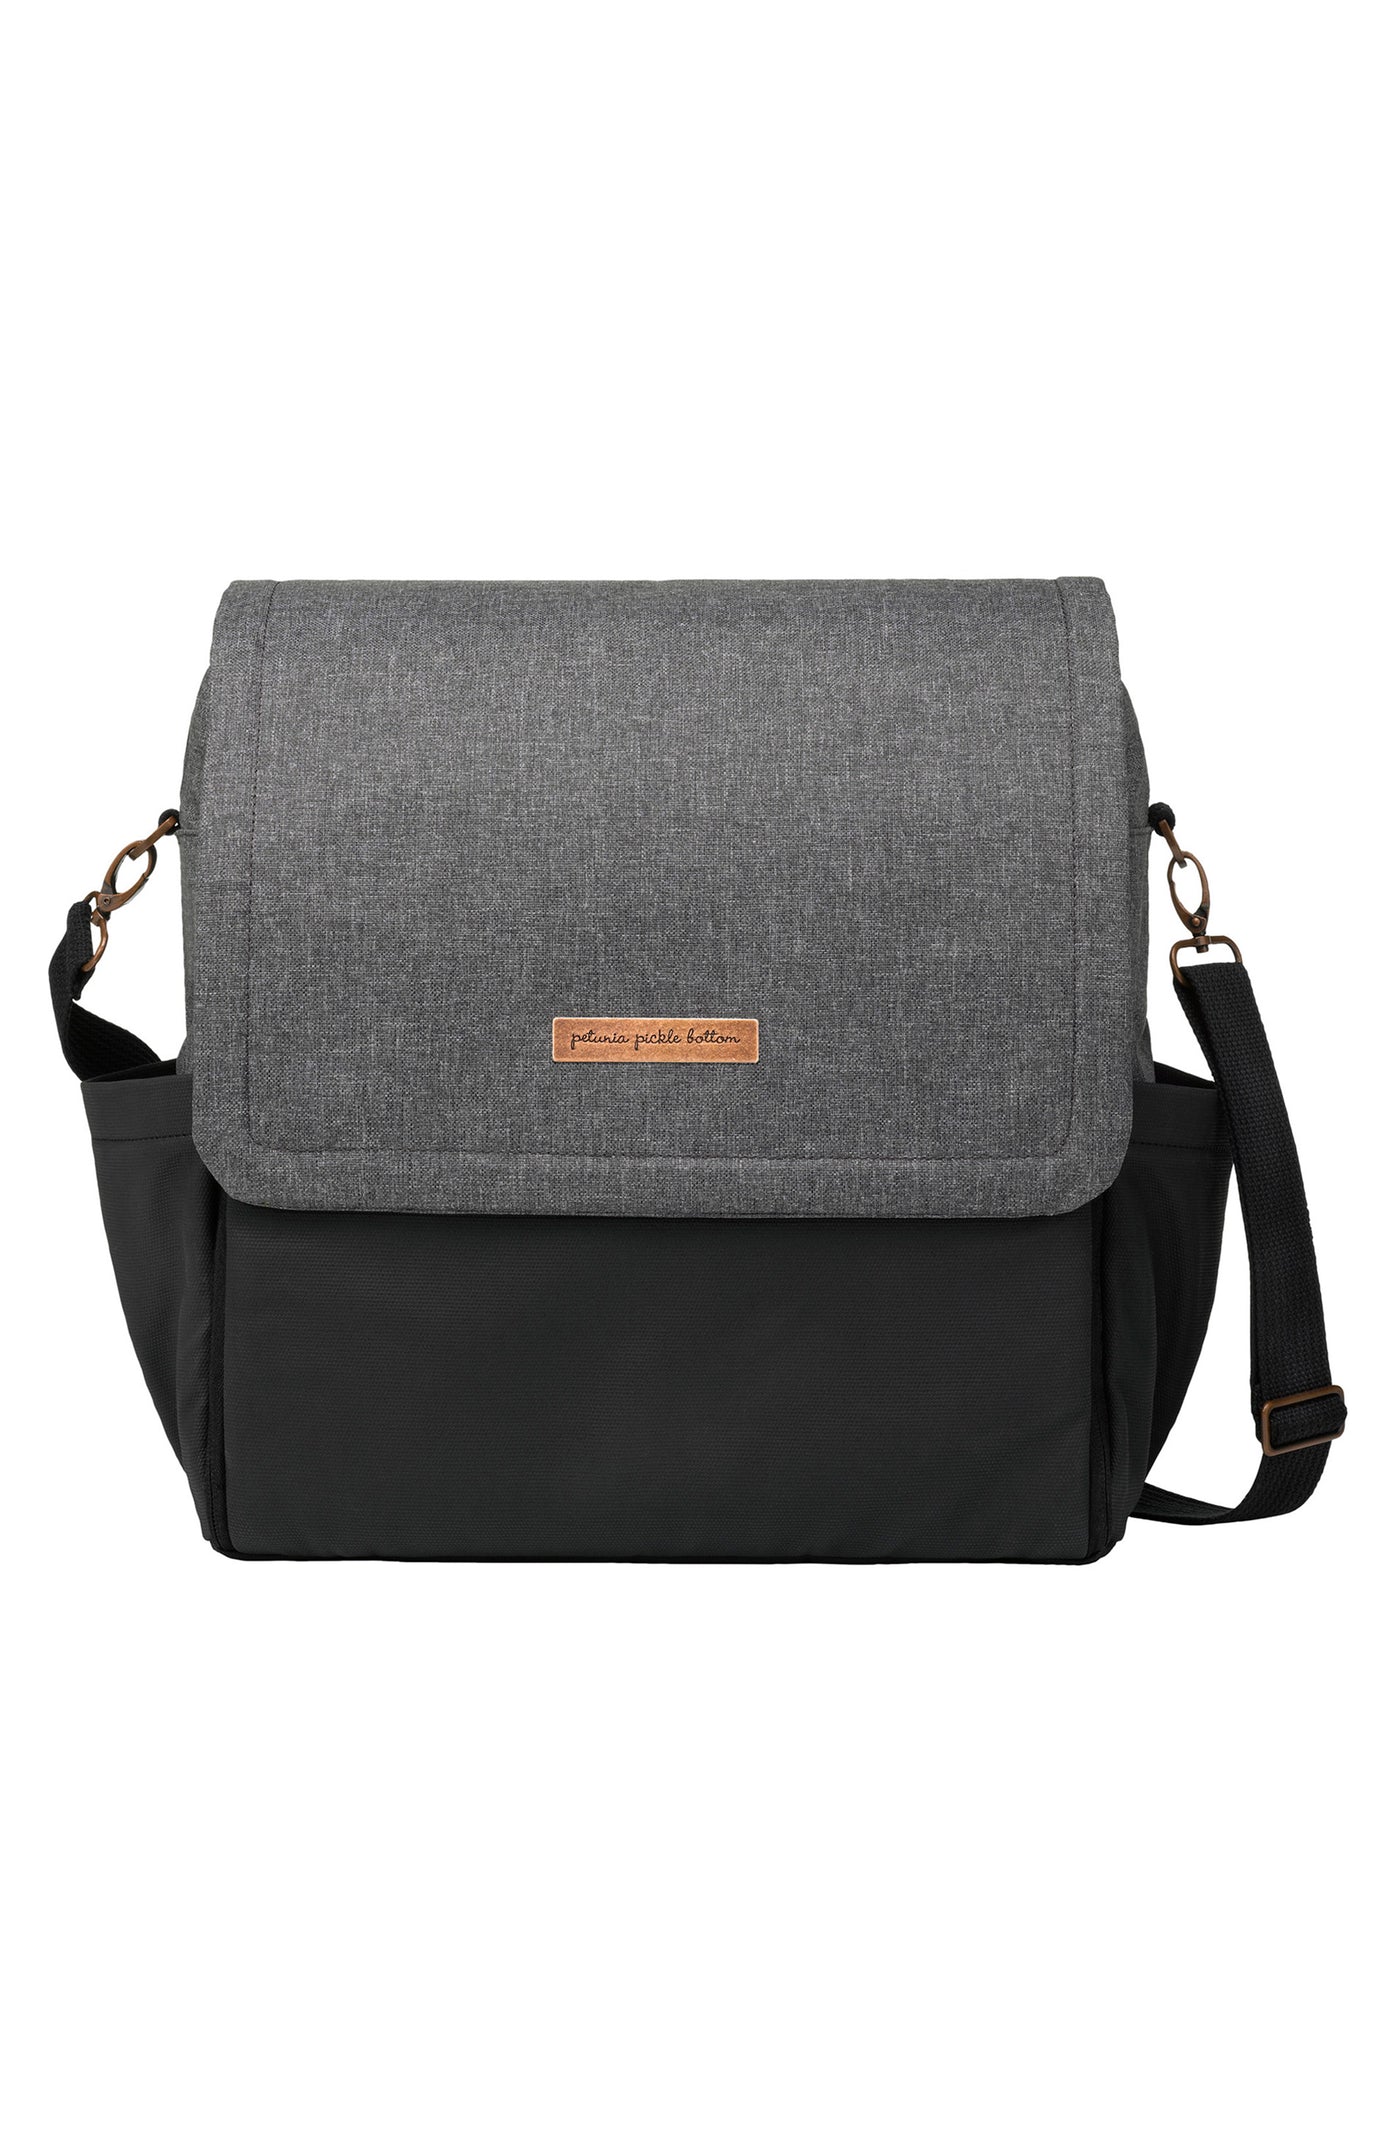 Petunia Pickle Bottom - Boxy Backpack in Graphite/Black Colorblock